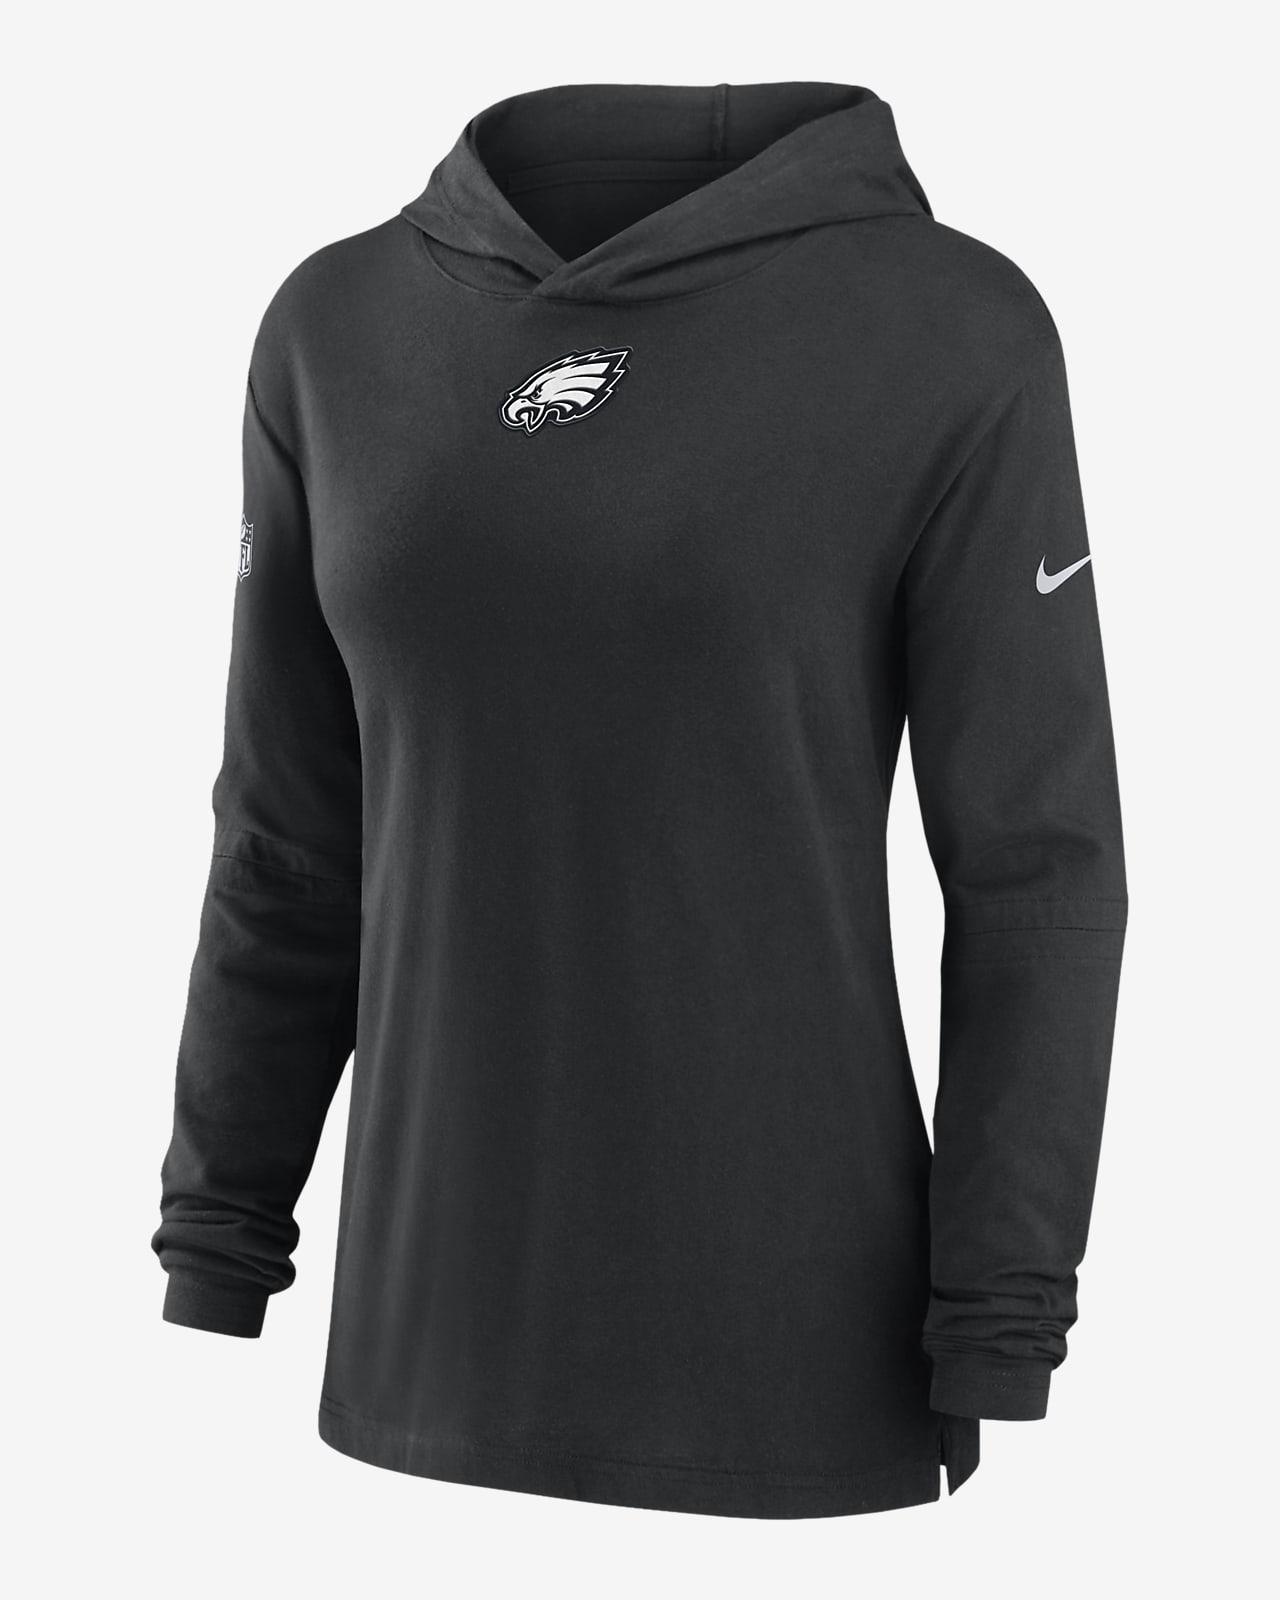 Nike Dri-FIT Sideline (NFL Philadelphia Eagles) Women's Long-Sleeve Hooded Top